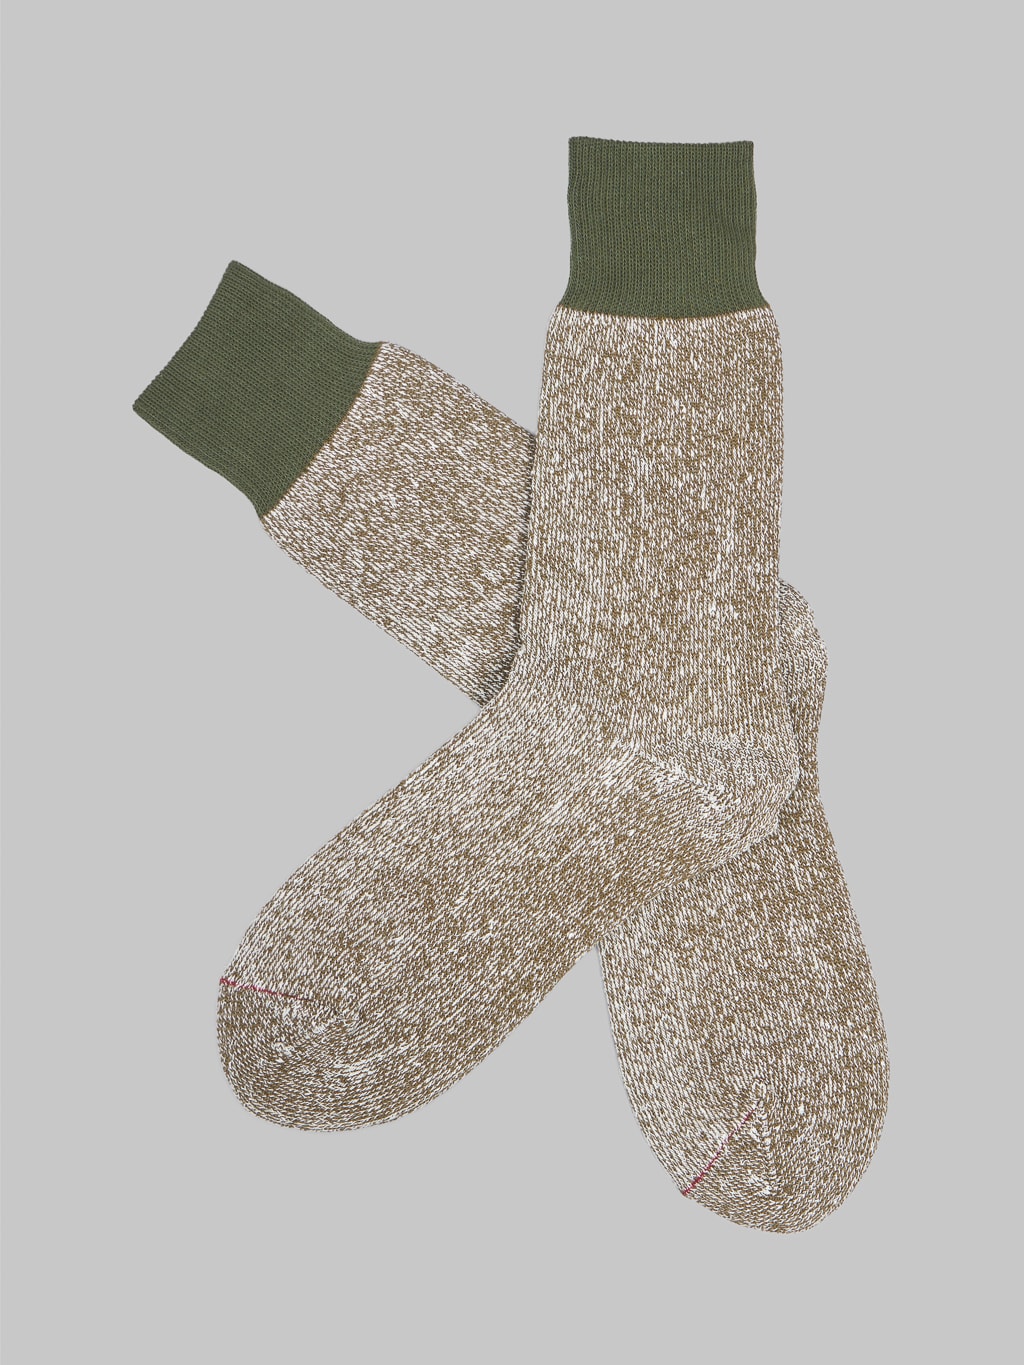 Rototo Double Face Socks Olive Khaki Texture